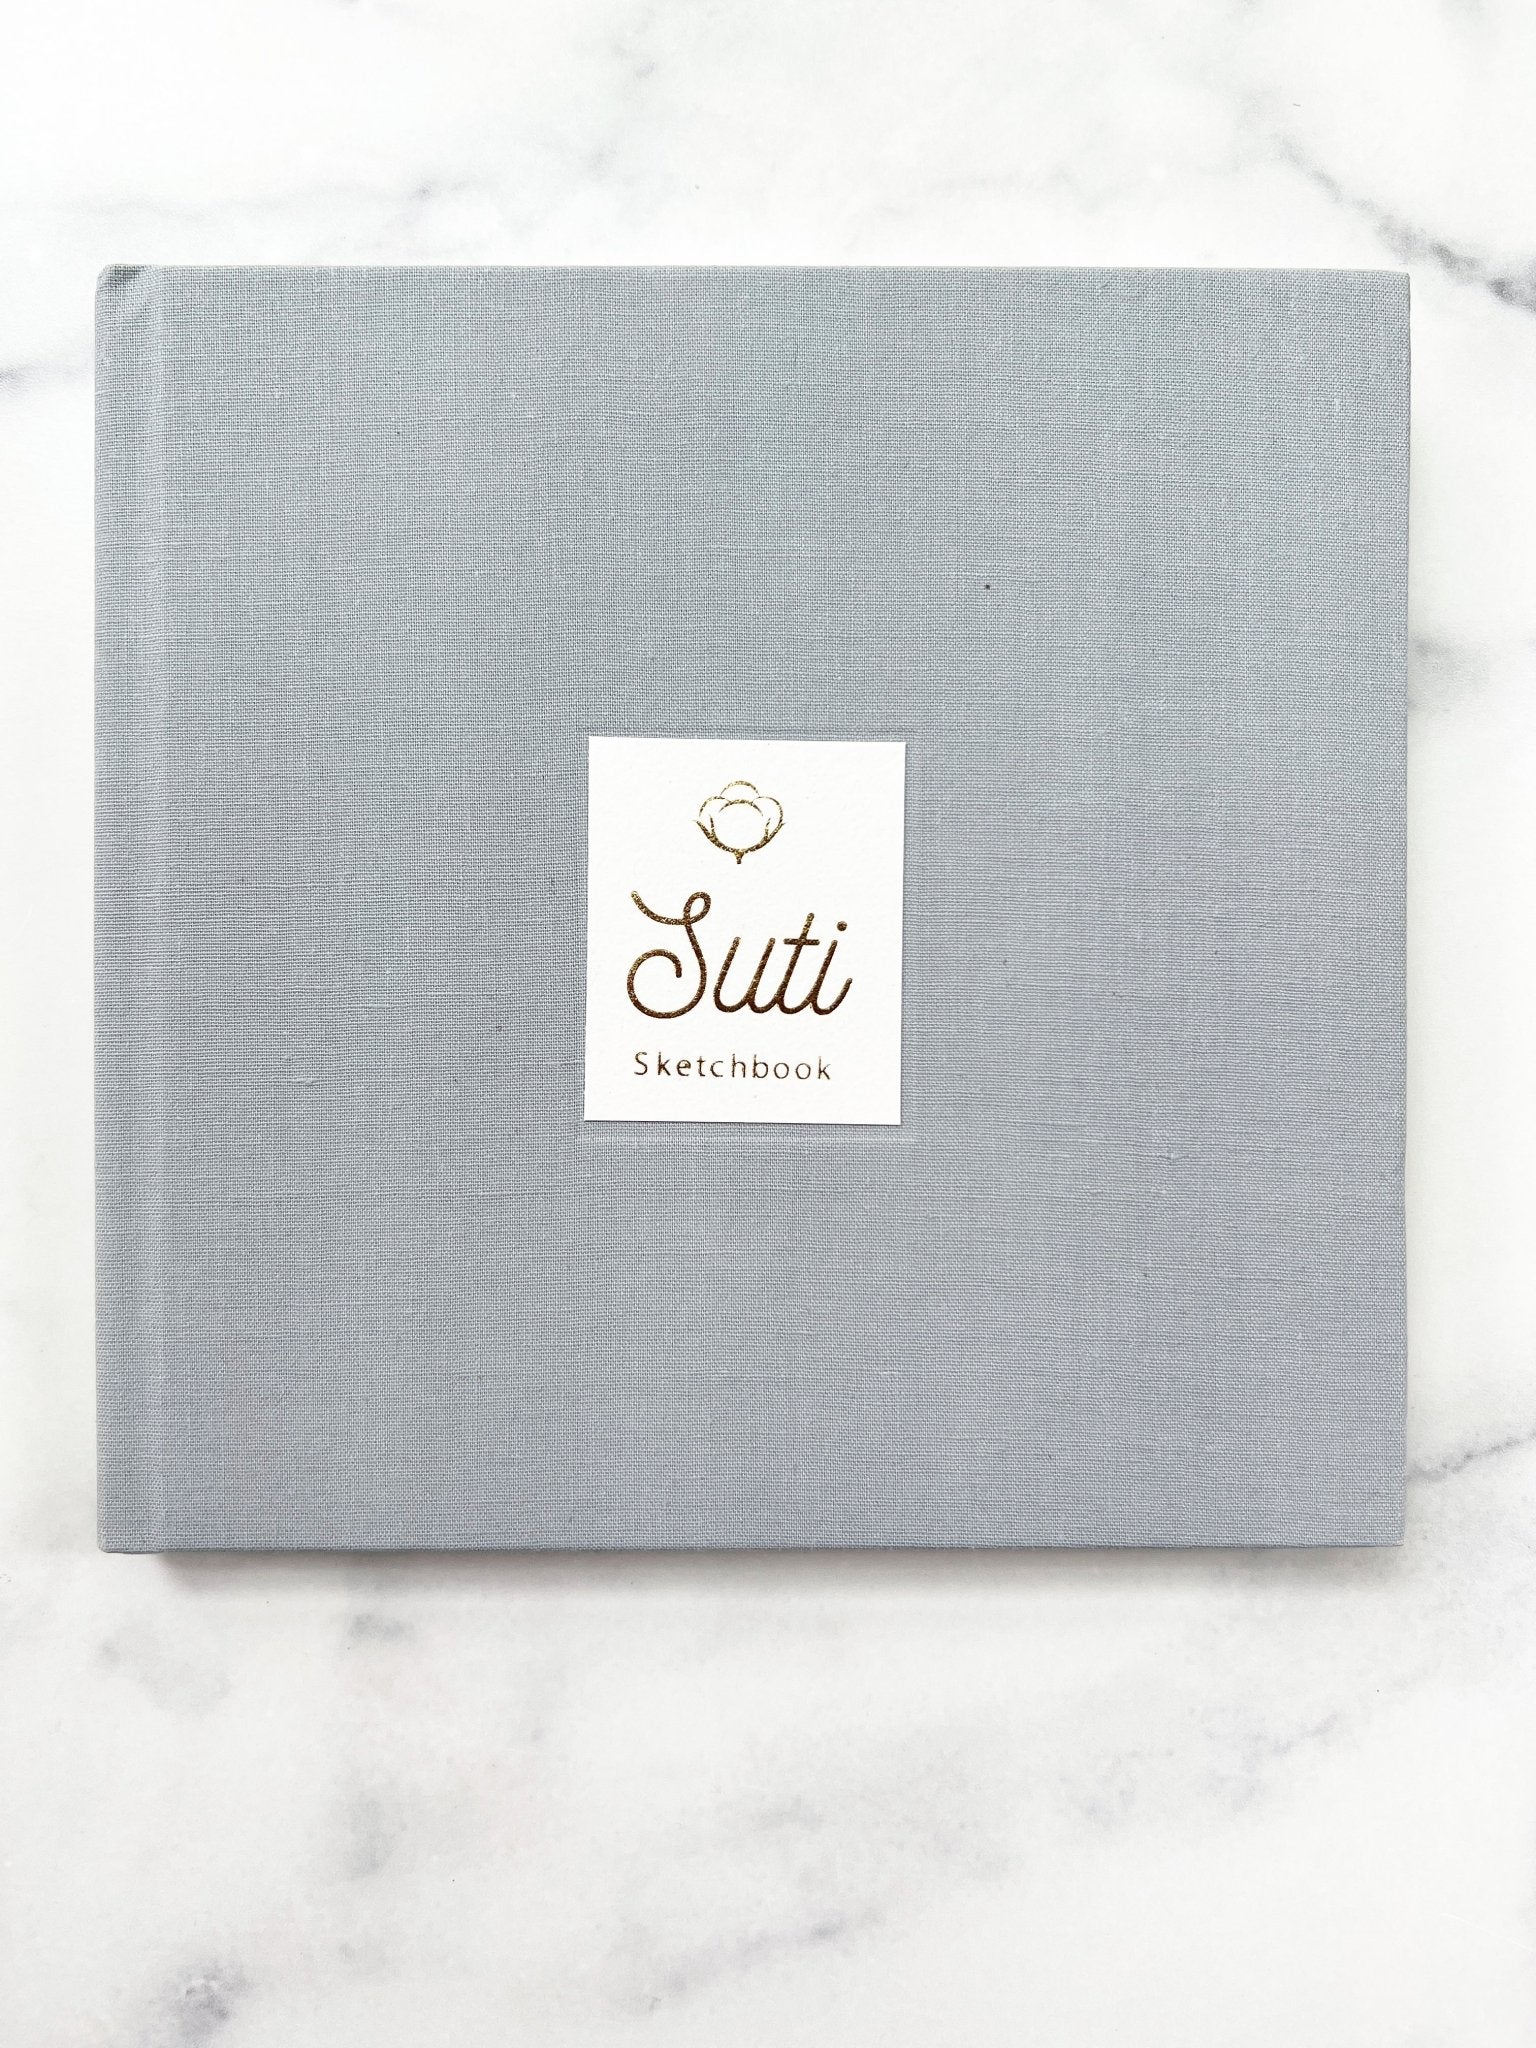 Suti Square Watercolor Sketchbooks, 100% cotton hardbound sketchbooks - Ruby Mountain